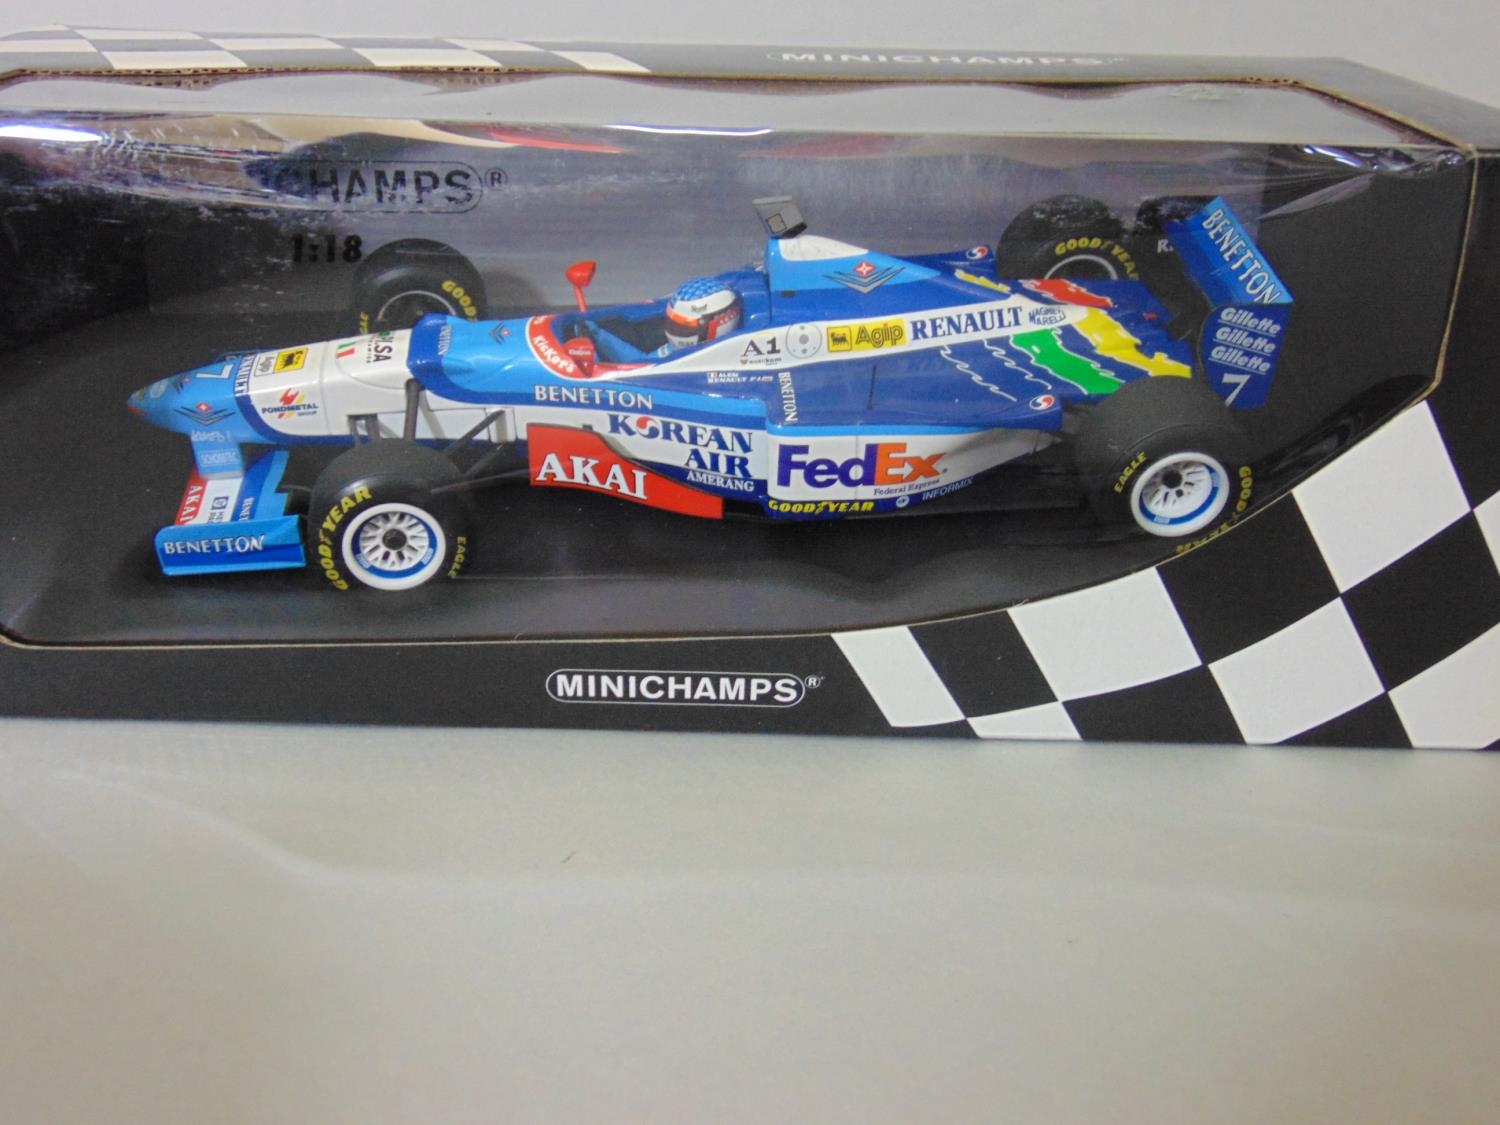 8 Minichamps Grand Prix Formula One 1:18 scale boxed model racing cars ...